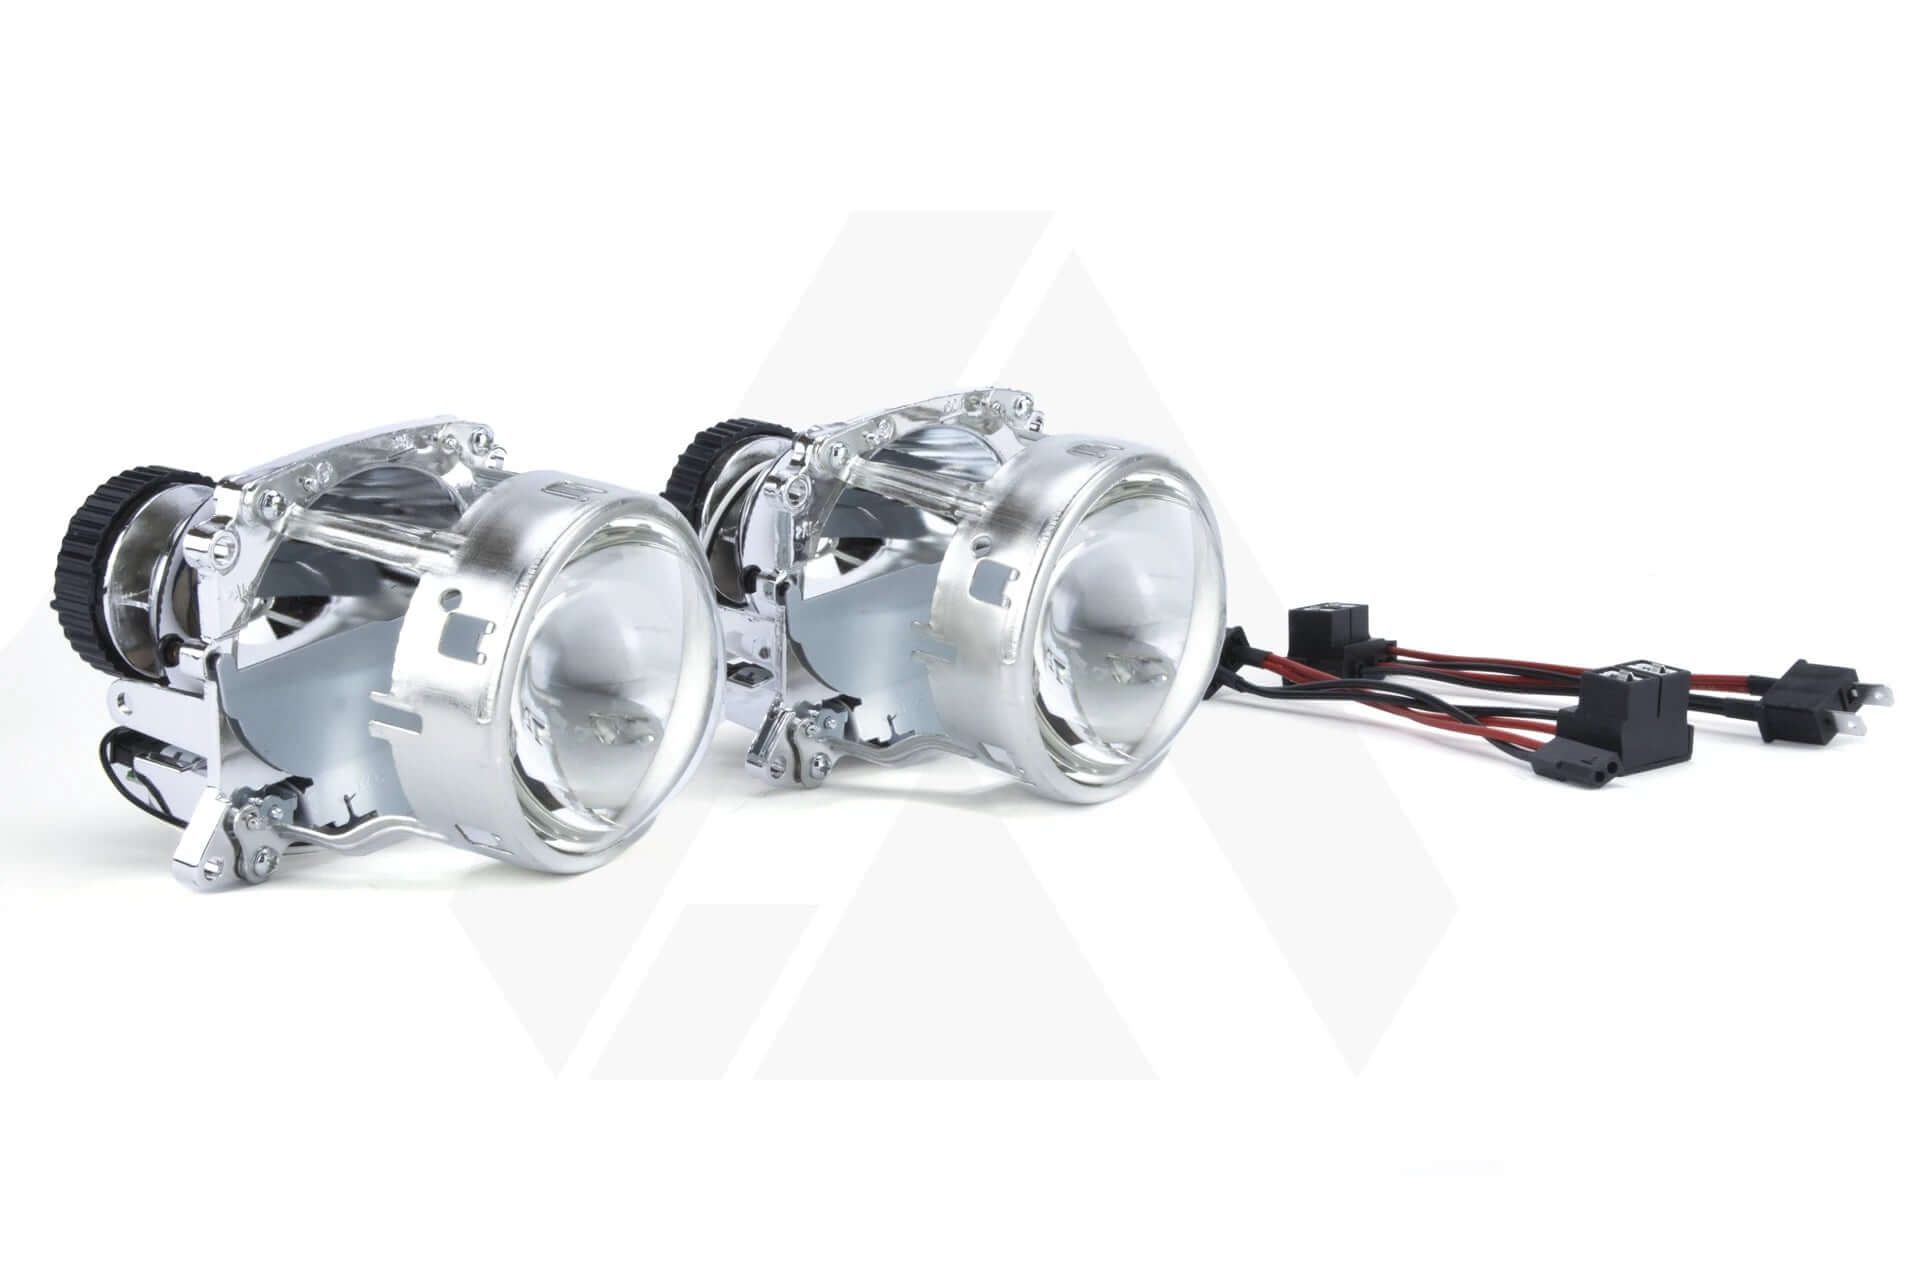 BMW X3 E83 06-10 bi-xenon headlight repair & upgrade kit for D1S Facelift xenon headlights